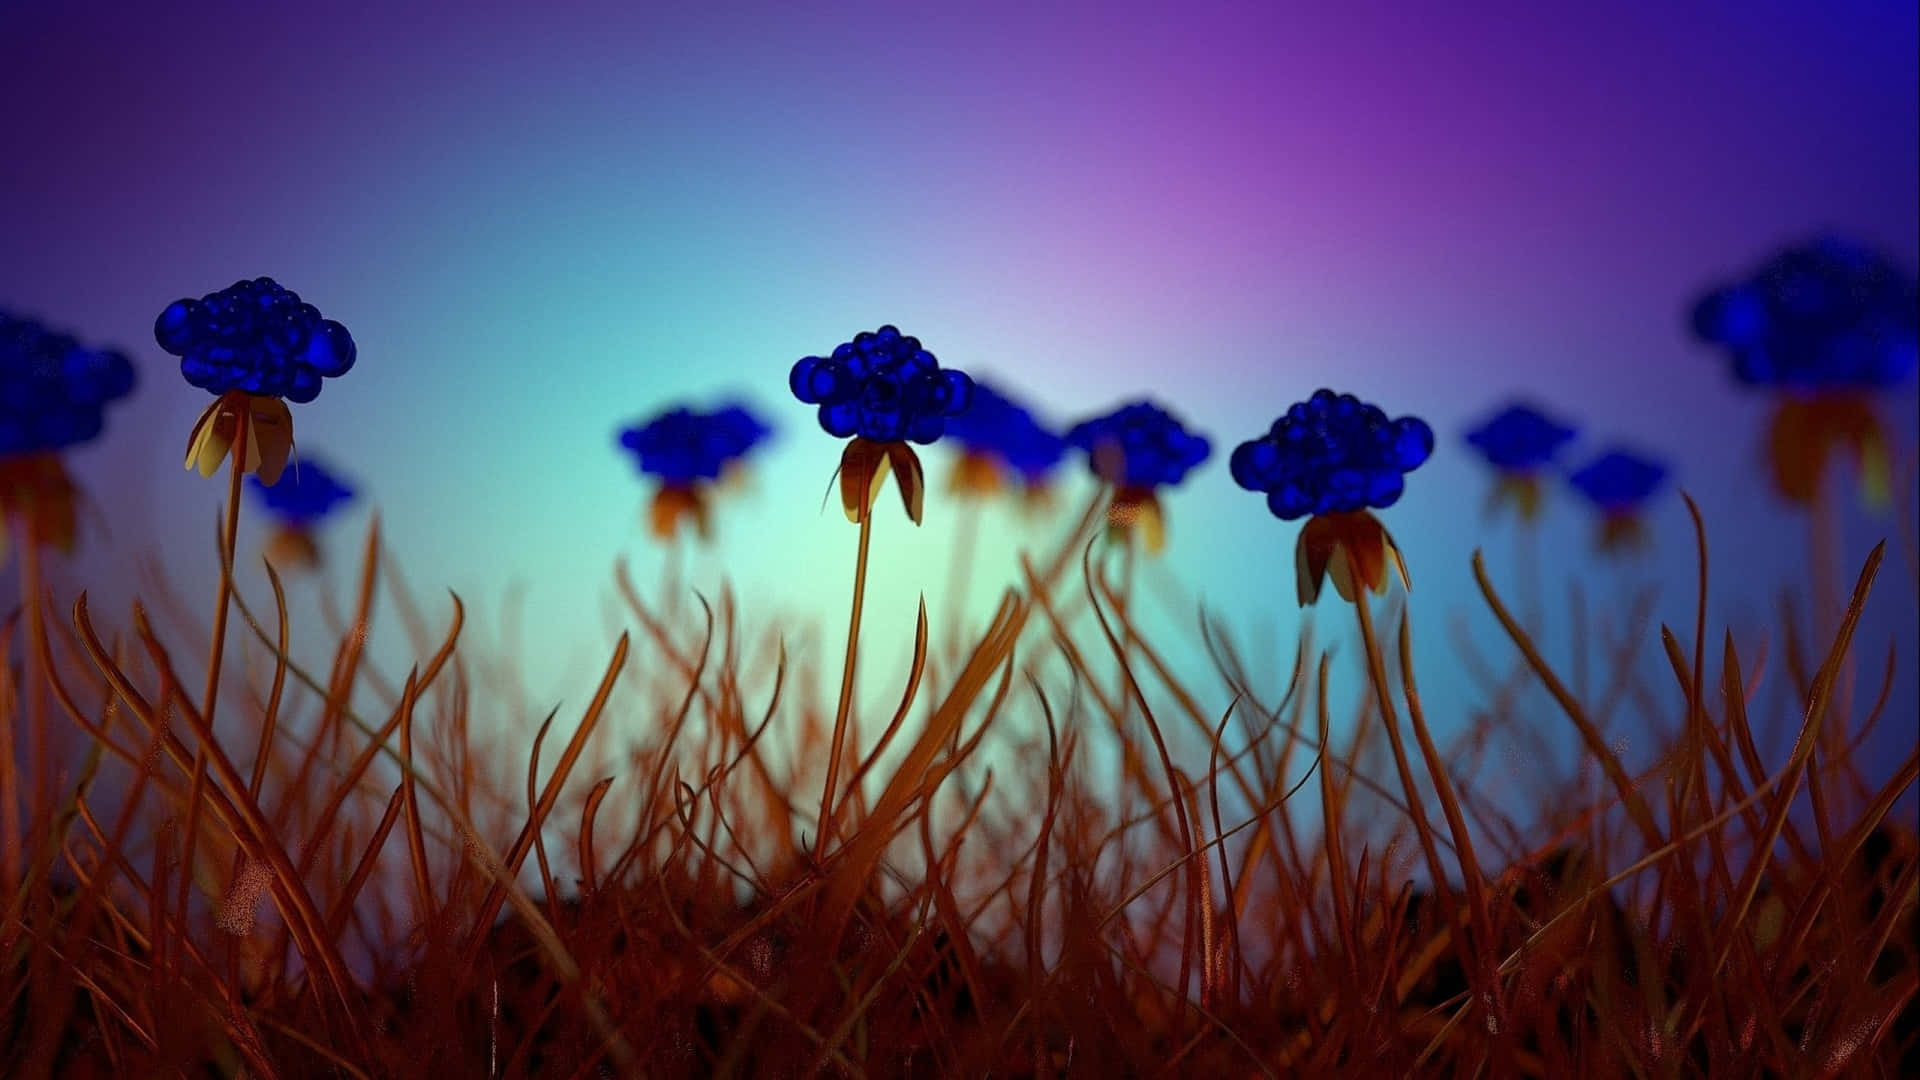 Blooming Blue Flower on a Desktop Wallpaper